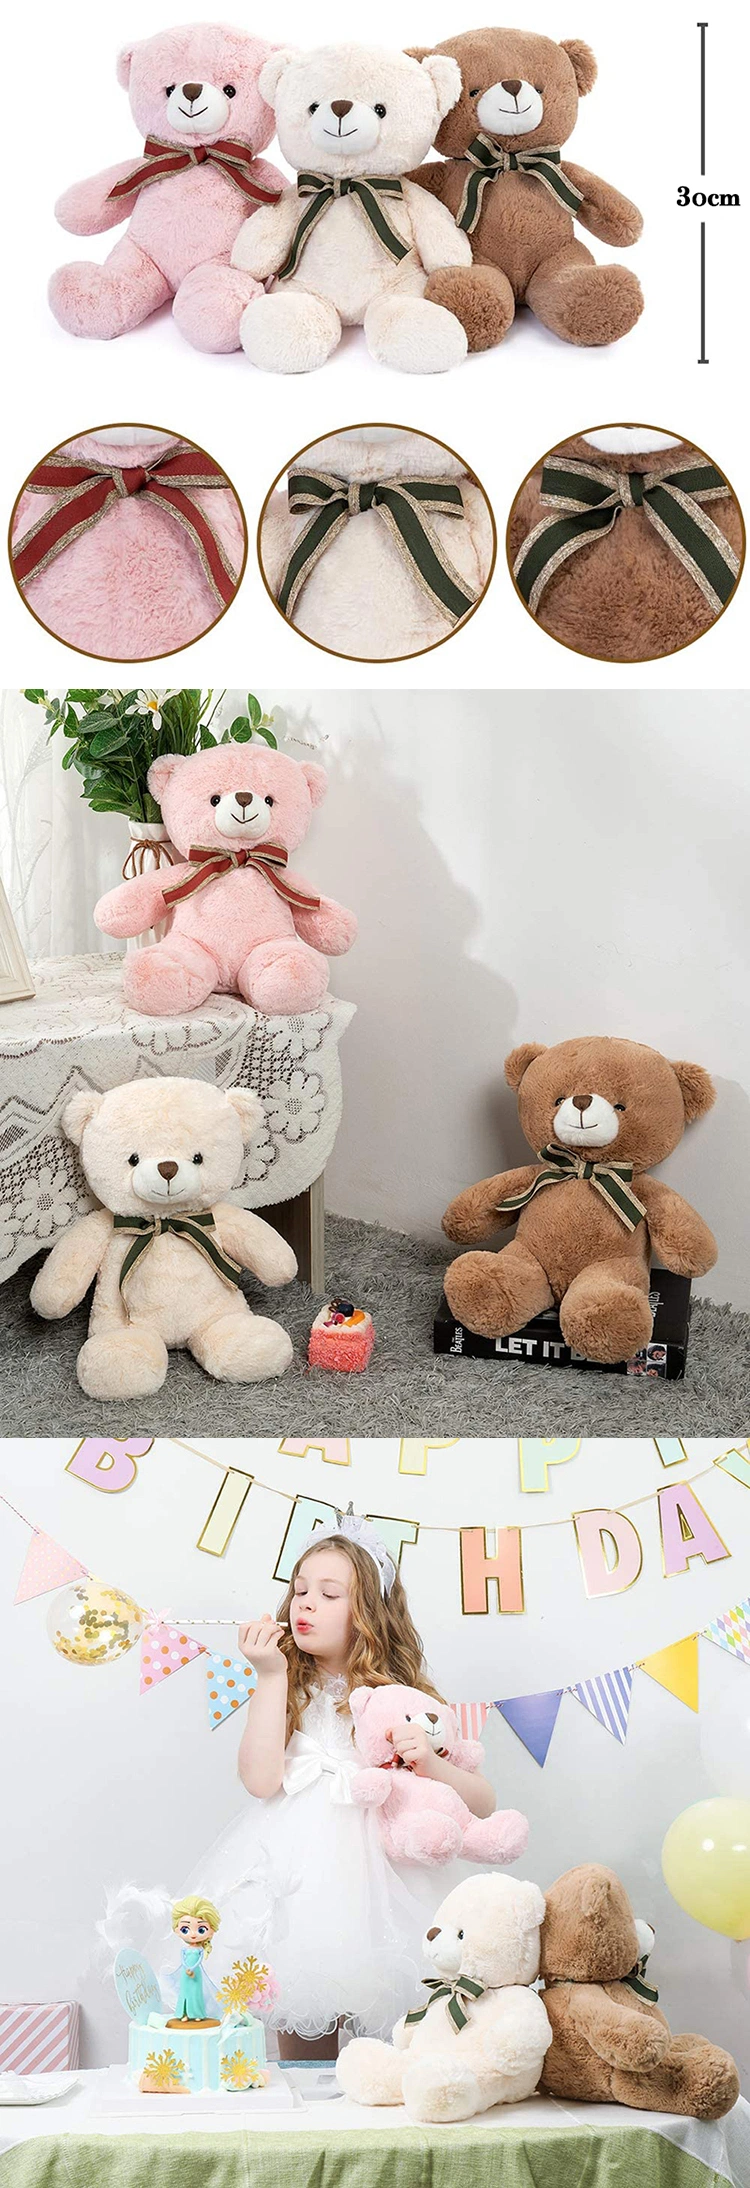 Free Sample Hot Selling Plush Bear Toy Origin Plush Toy Manufacture Custom Teddy Bear with Bow